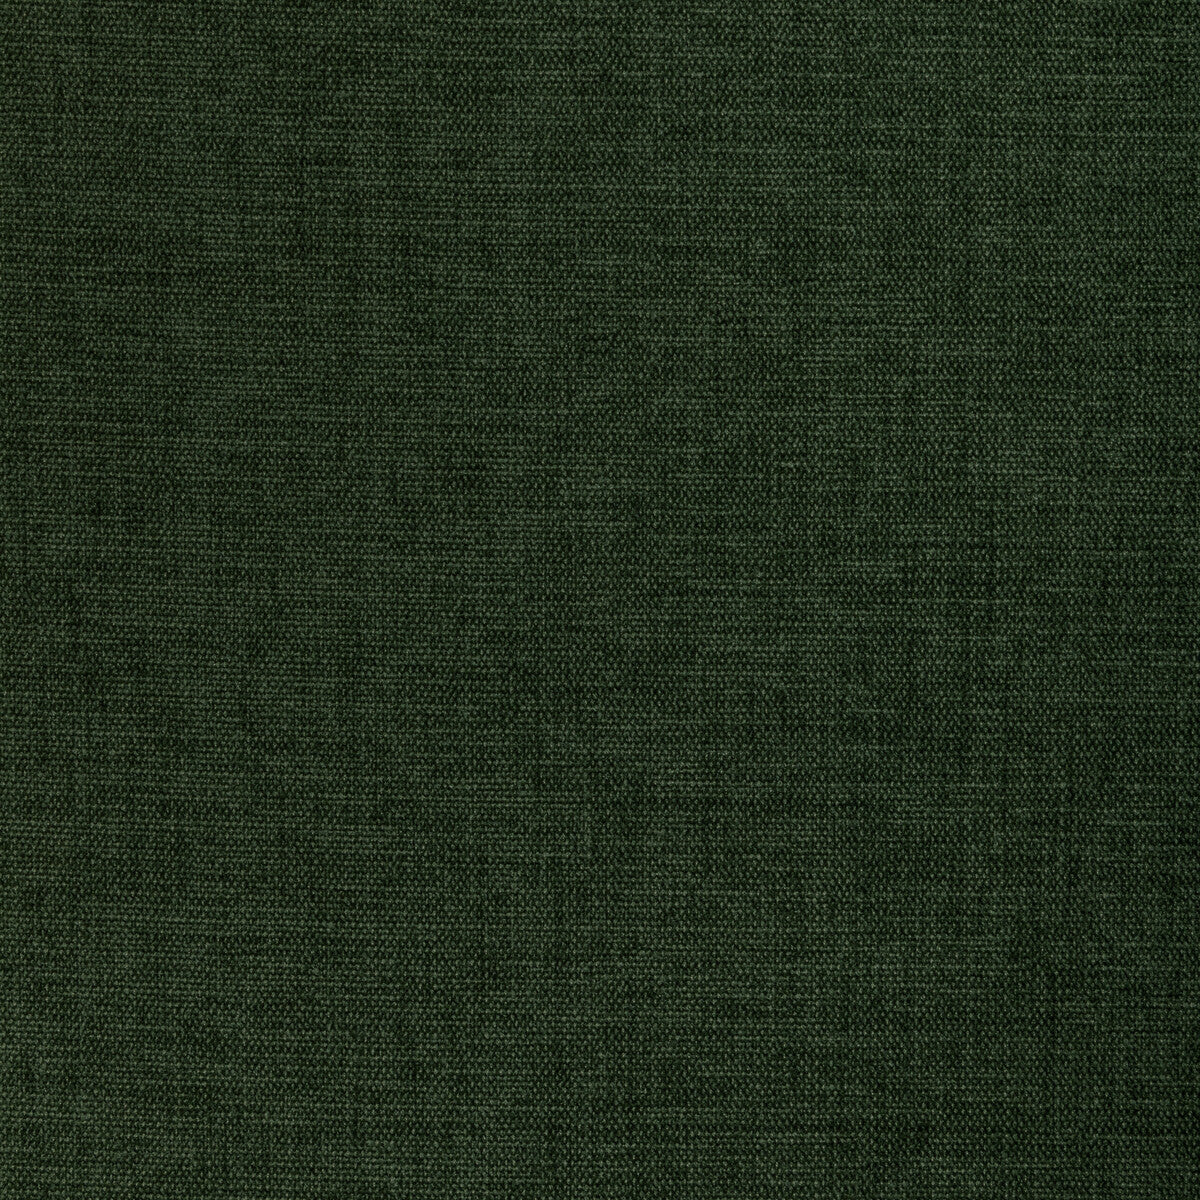 Kravet Smart fabric in 34959-30 color - pattern 34959.30.0 - by Kravet Smart in the Performance Kravetarmor collection